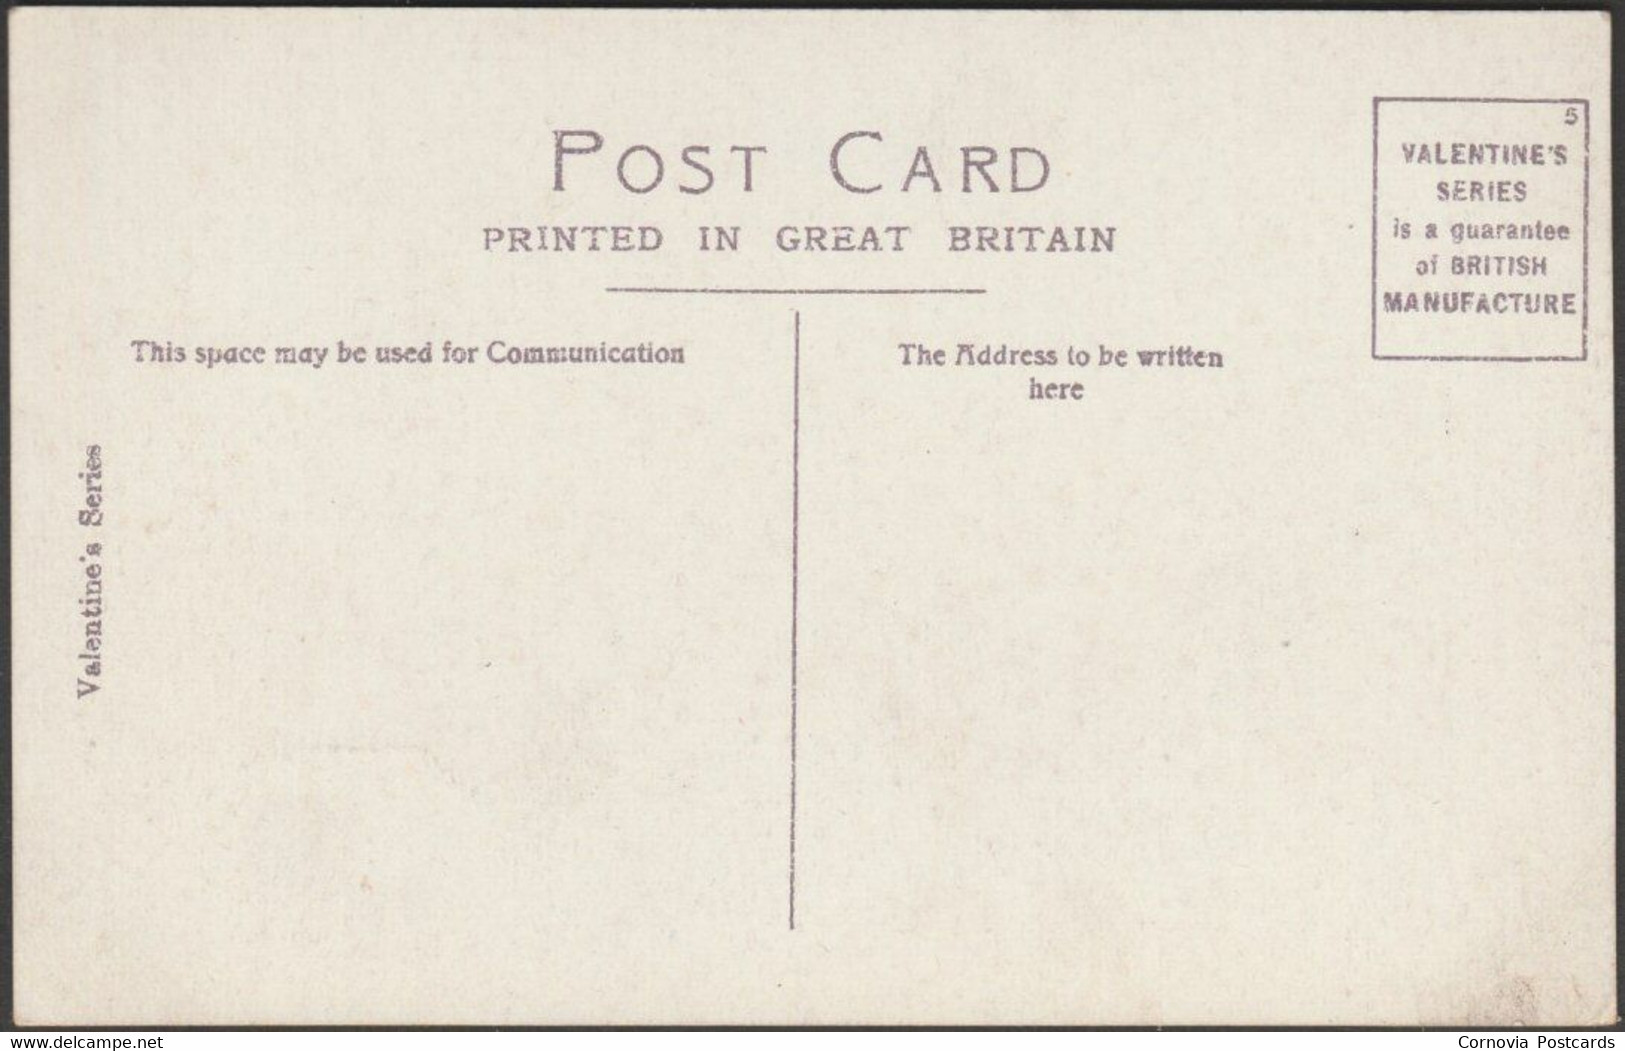 St Botolph's Priory, Colchester, Essex, C.1910s - Valentine's Postcard - Colchester